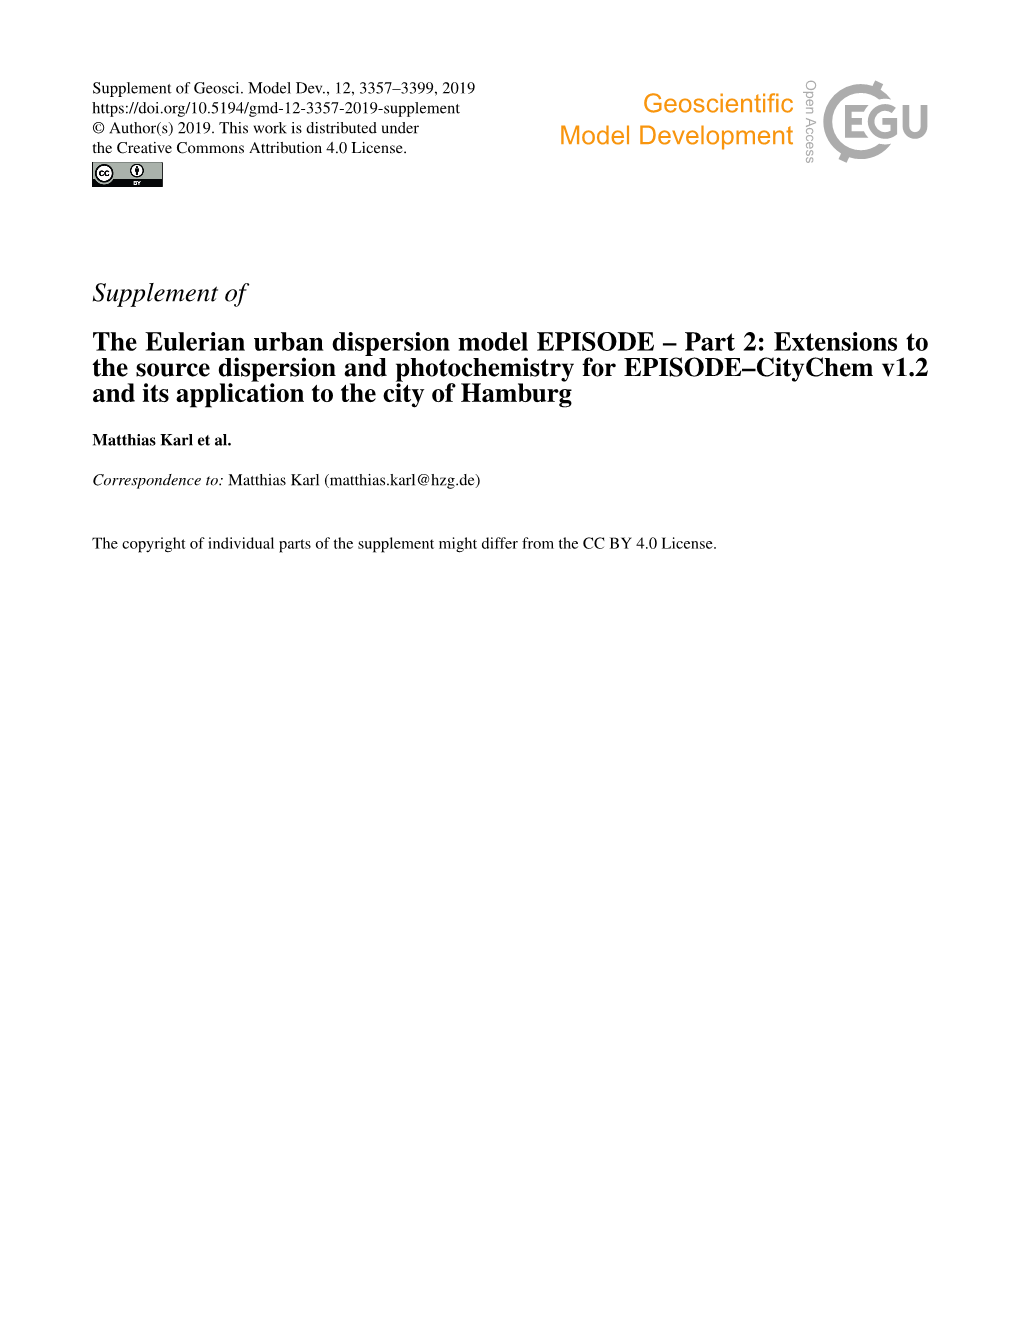 Supplement of the Eulerian Urban Dispersion Model EPISODE